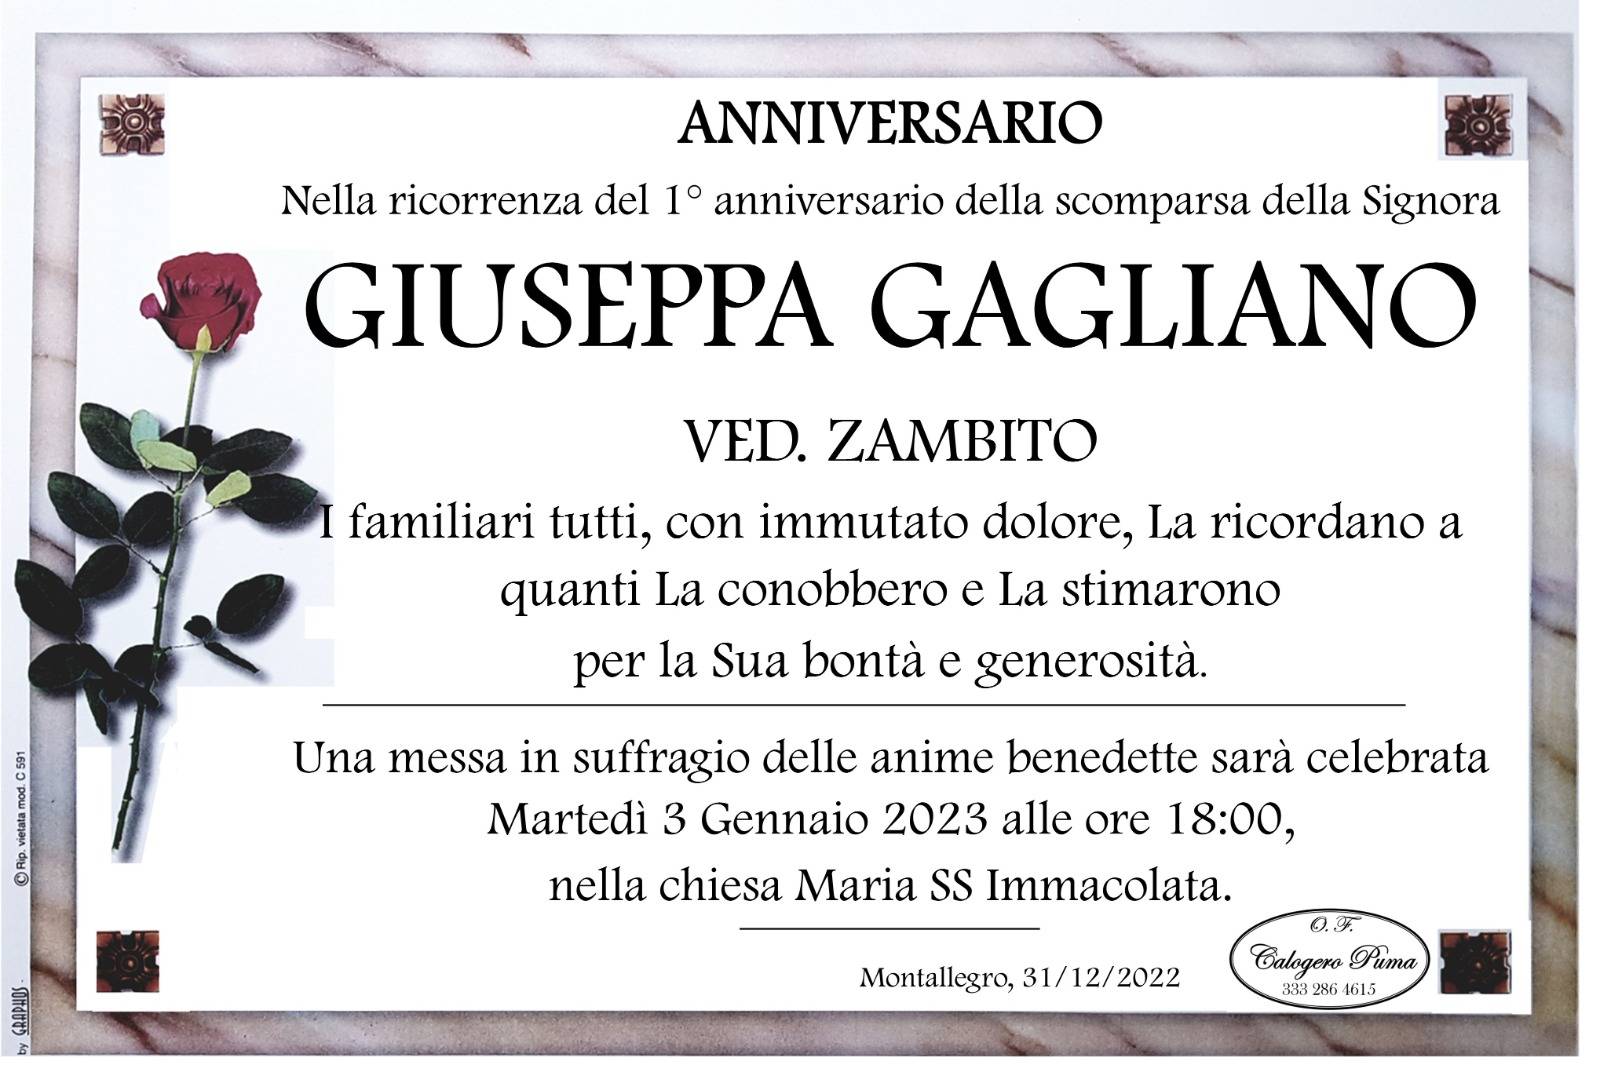 Giuseppa Gagliano